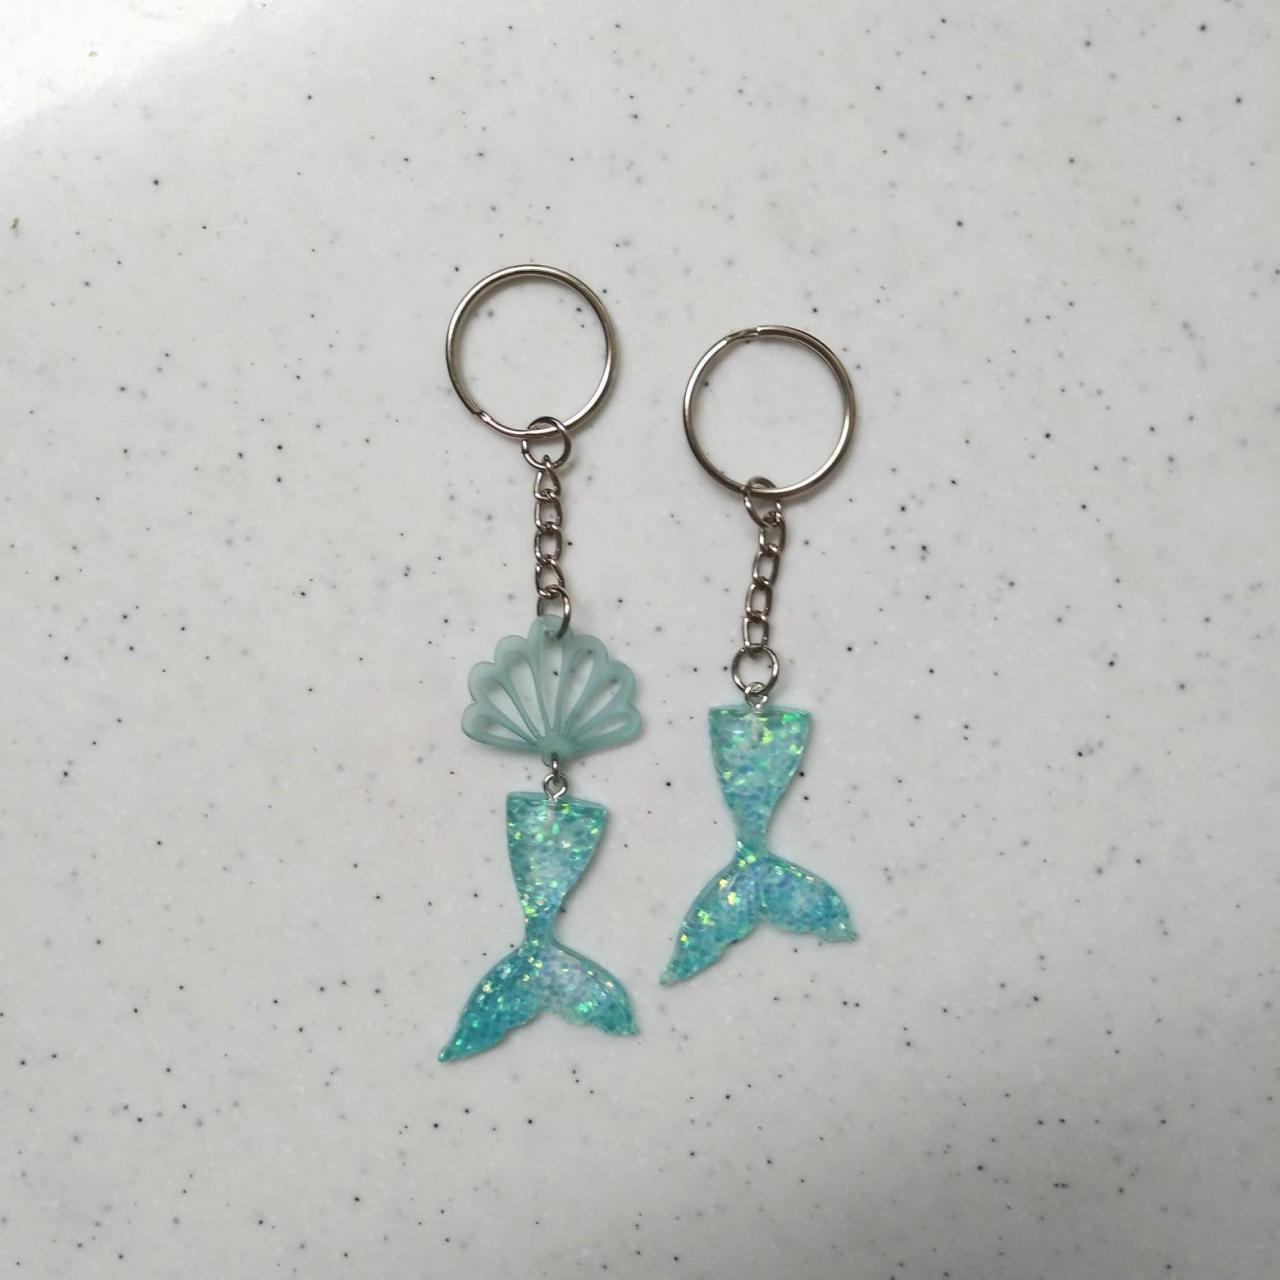 Aqua Glittery Mermaid Tail Keychain/ Mermaid Clamshell Keychain